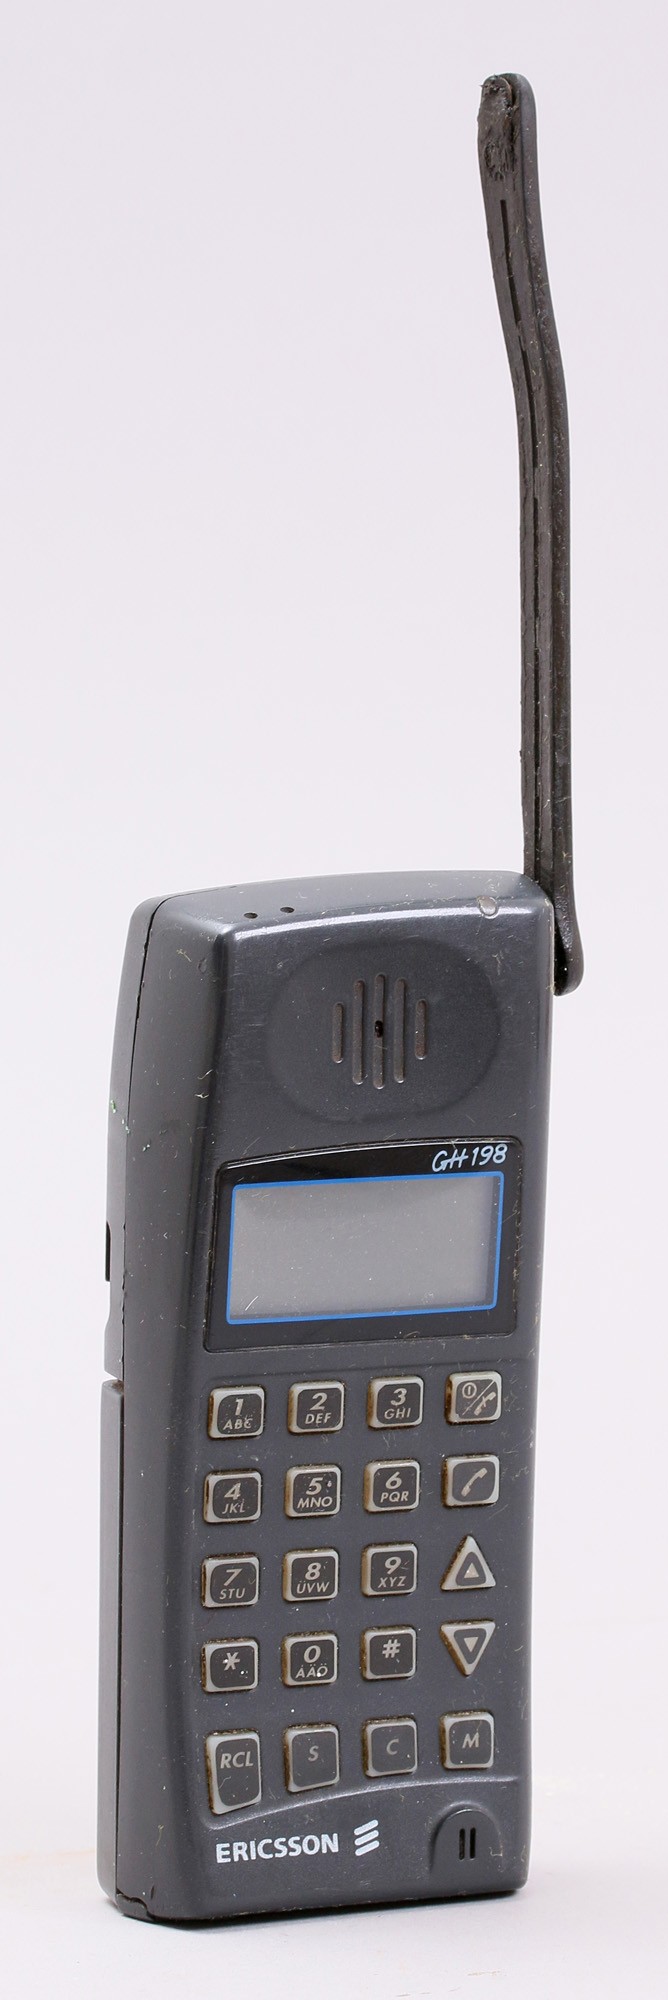 Ericsson mobiltelefon typ:GH 198 (Postamúzeum CC BY-NC-SA)